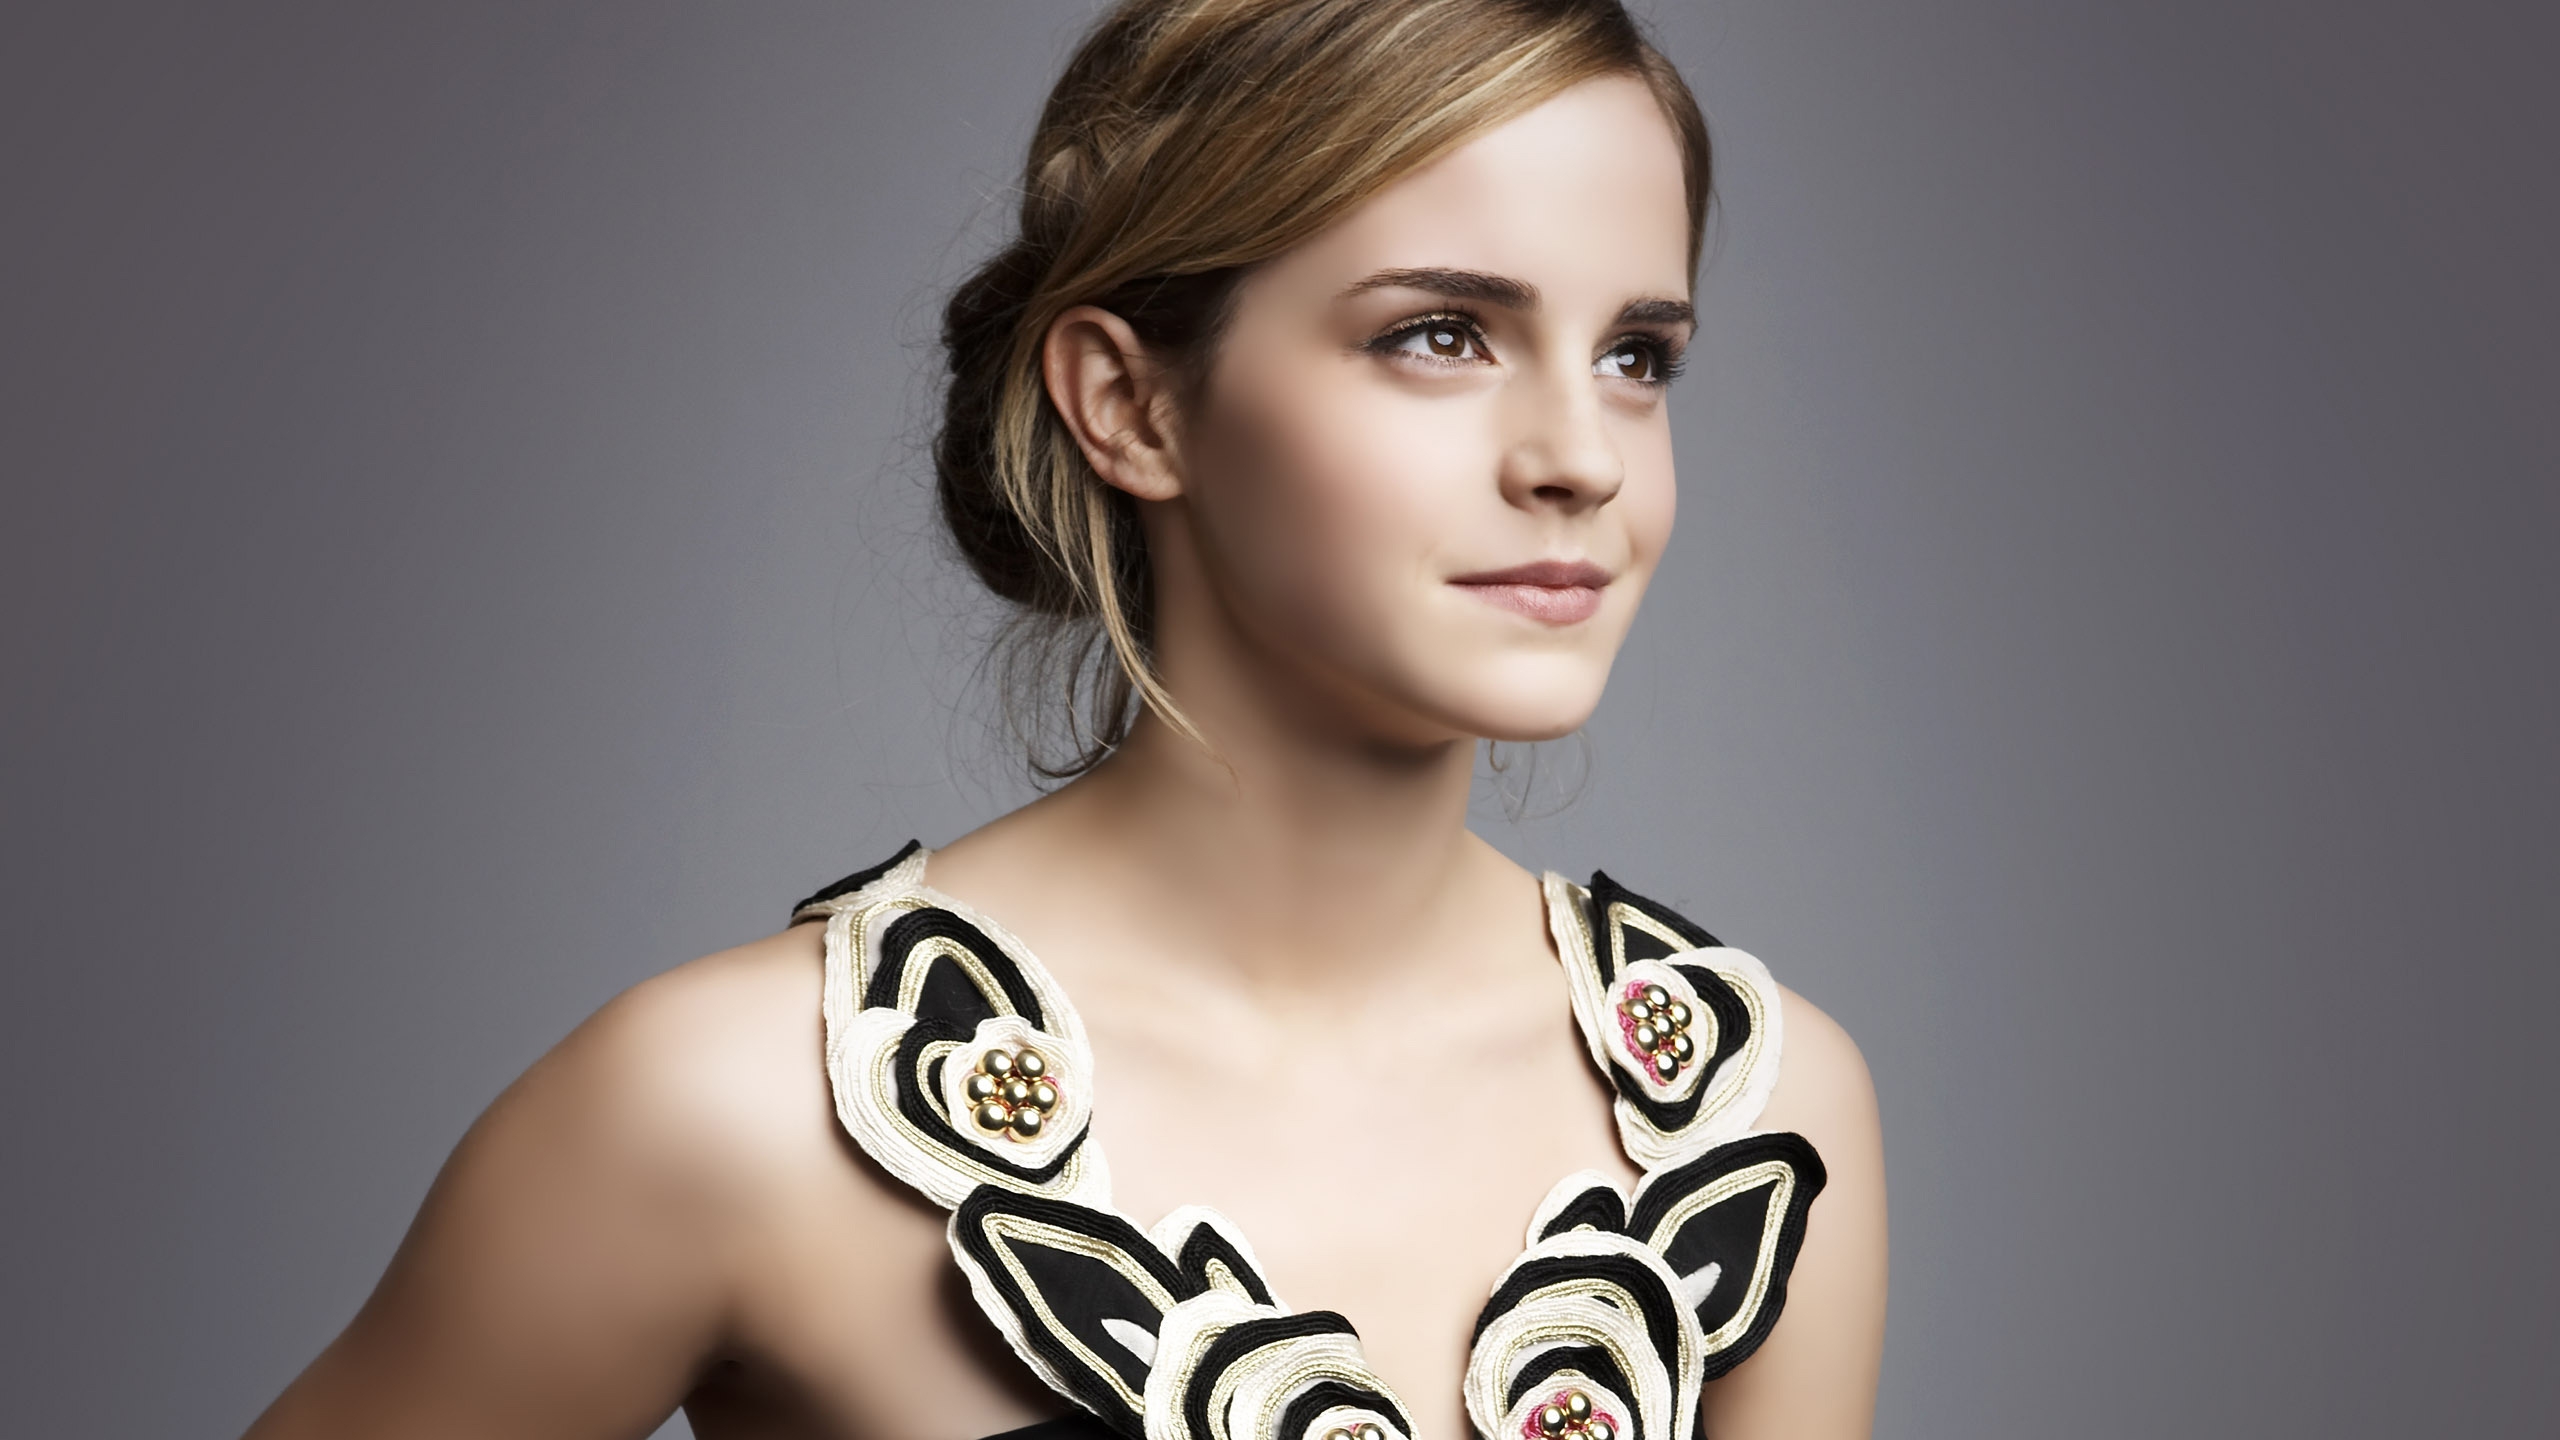 Emma Watson Smile for 2560x1440 HDTV resolution